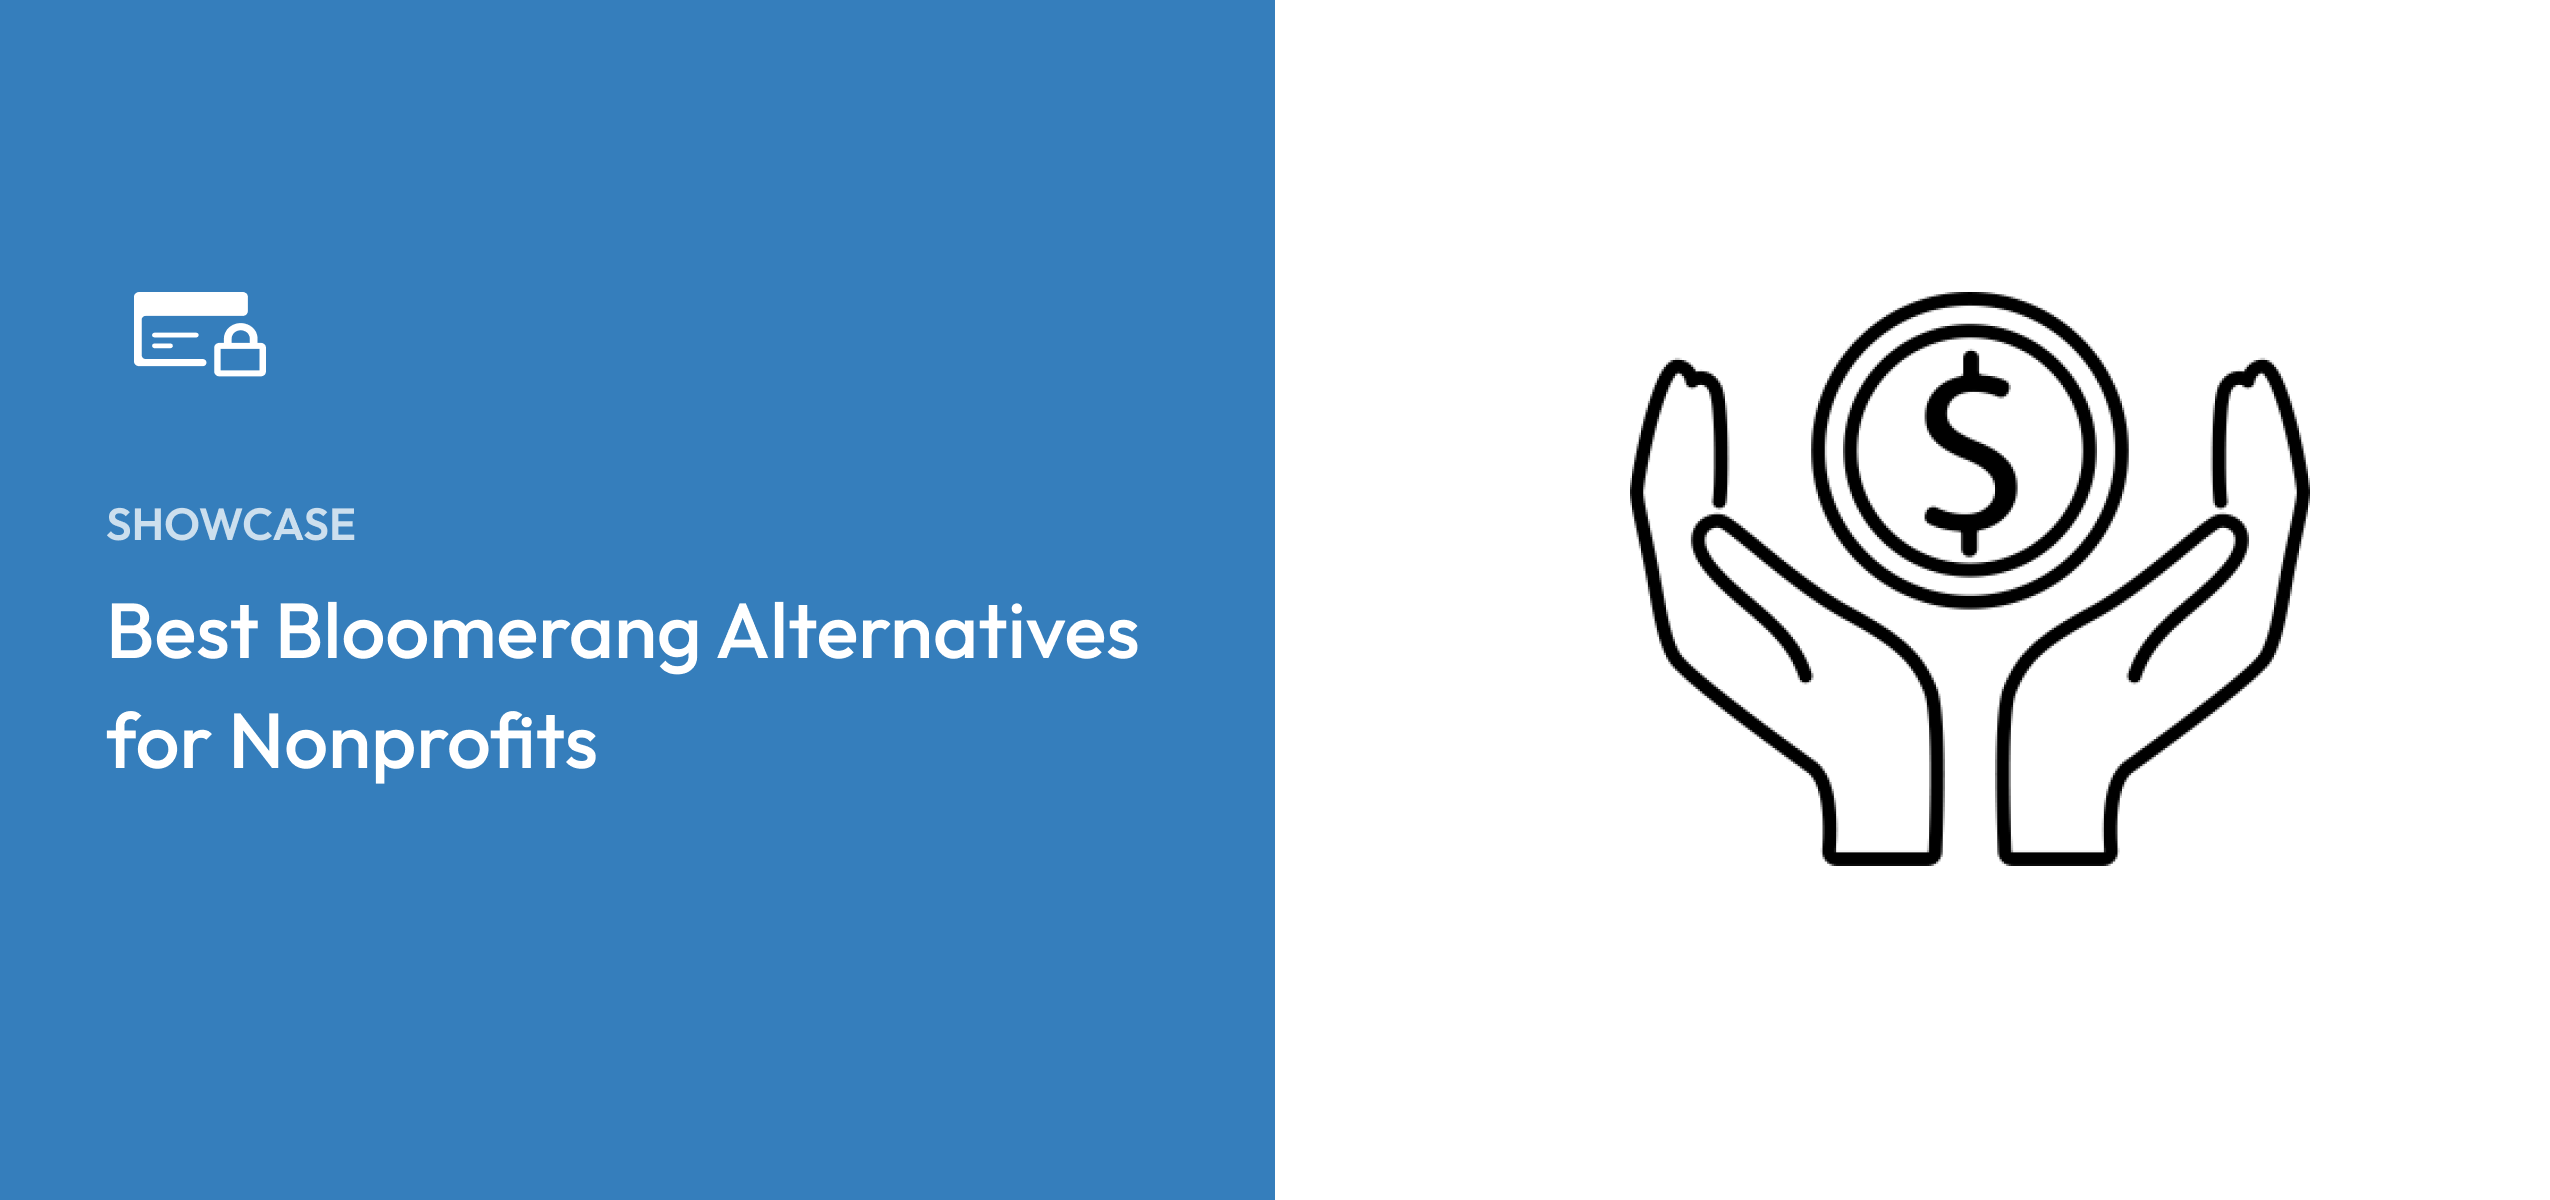 Six Best Bloomerang Alternatives for Nonprofits